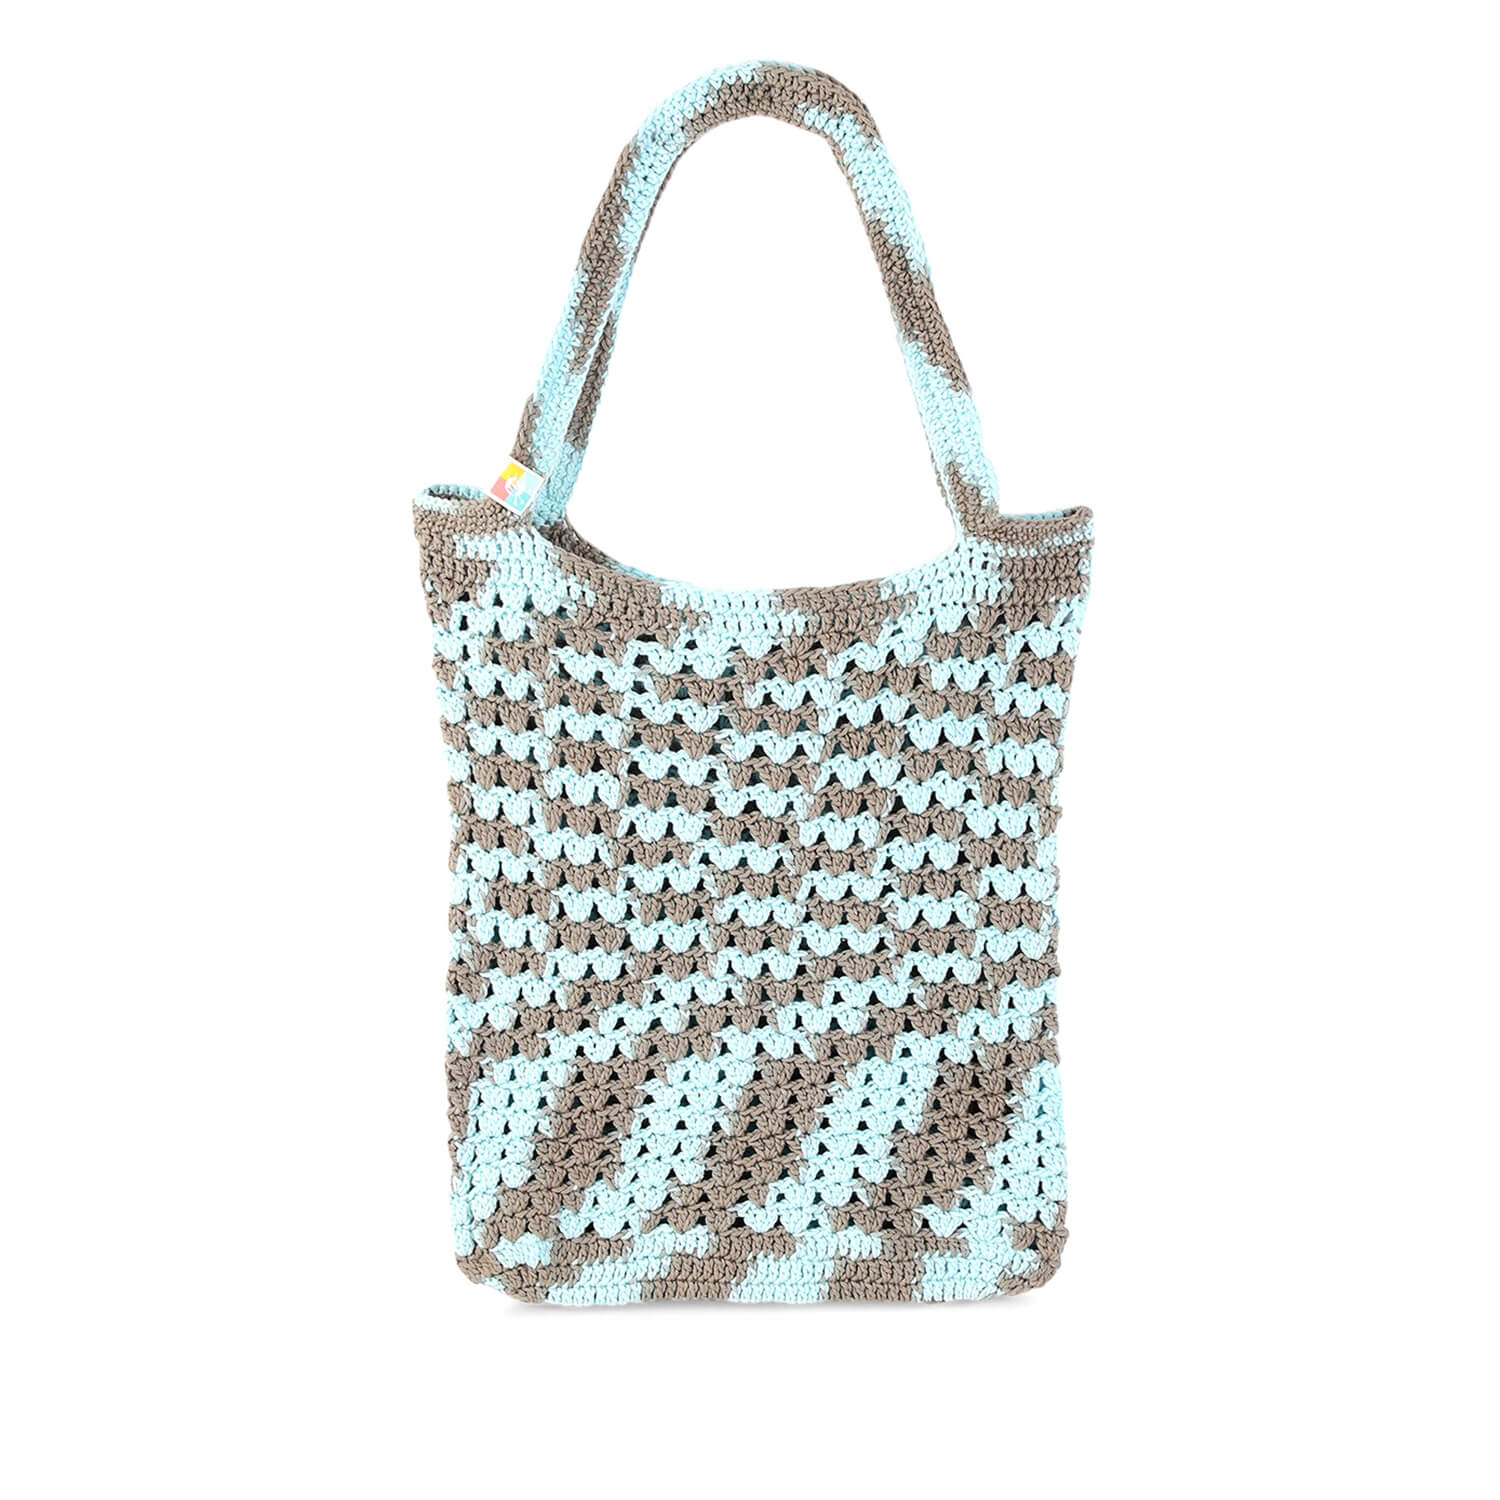 Handmade Crochet Market Bag - Blue, Grey 2653